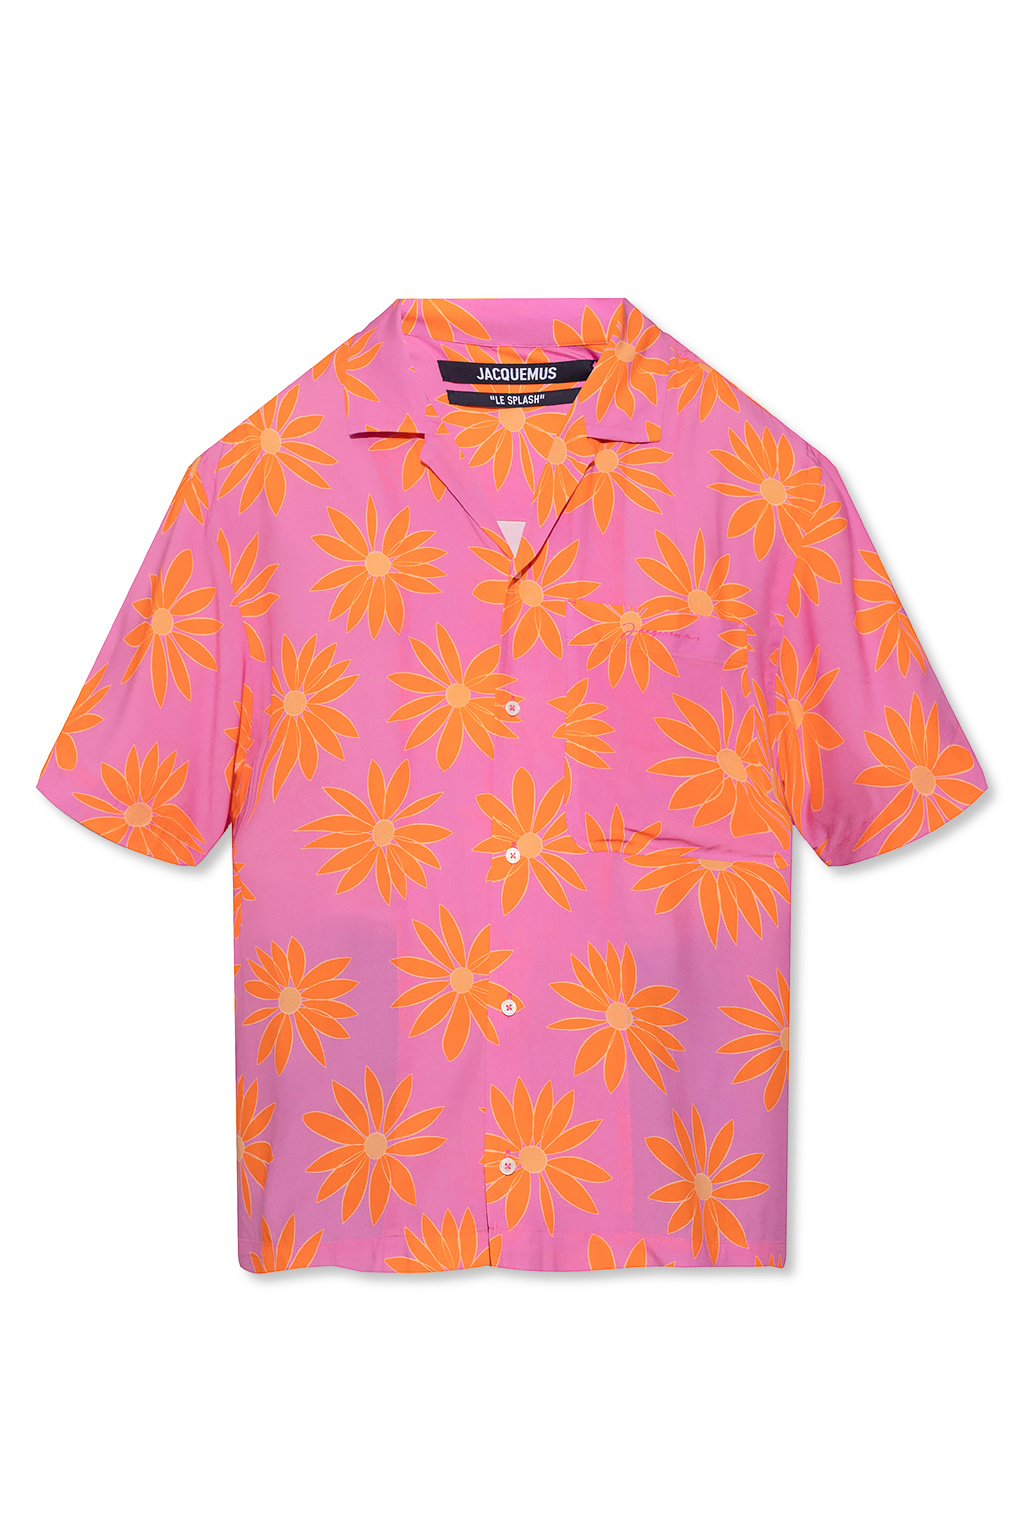 IetpShops | Jacquemus Floral zip shirt | Men's Clothing | Volcom